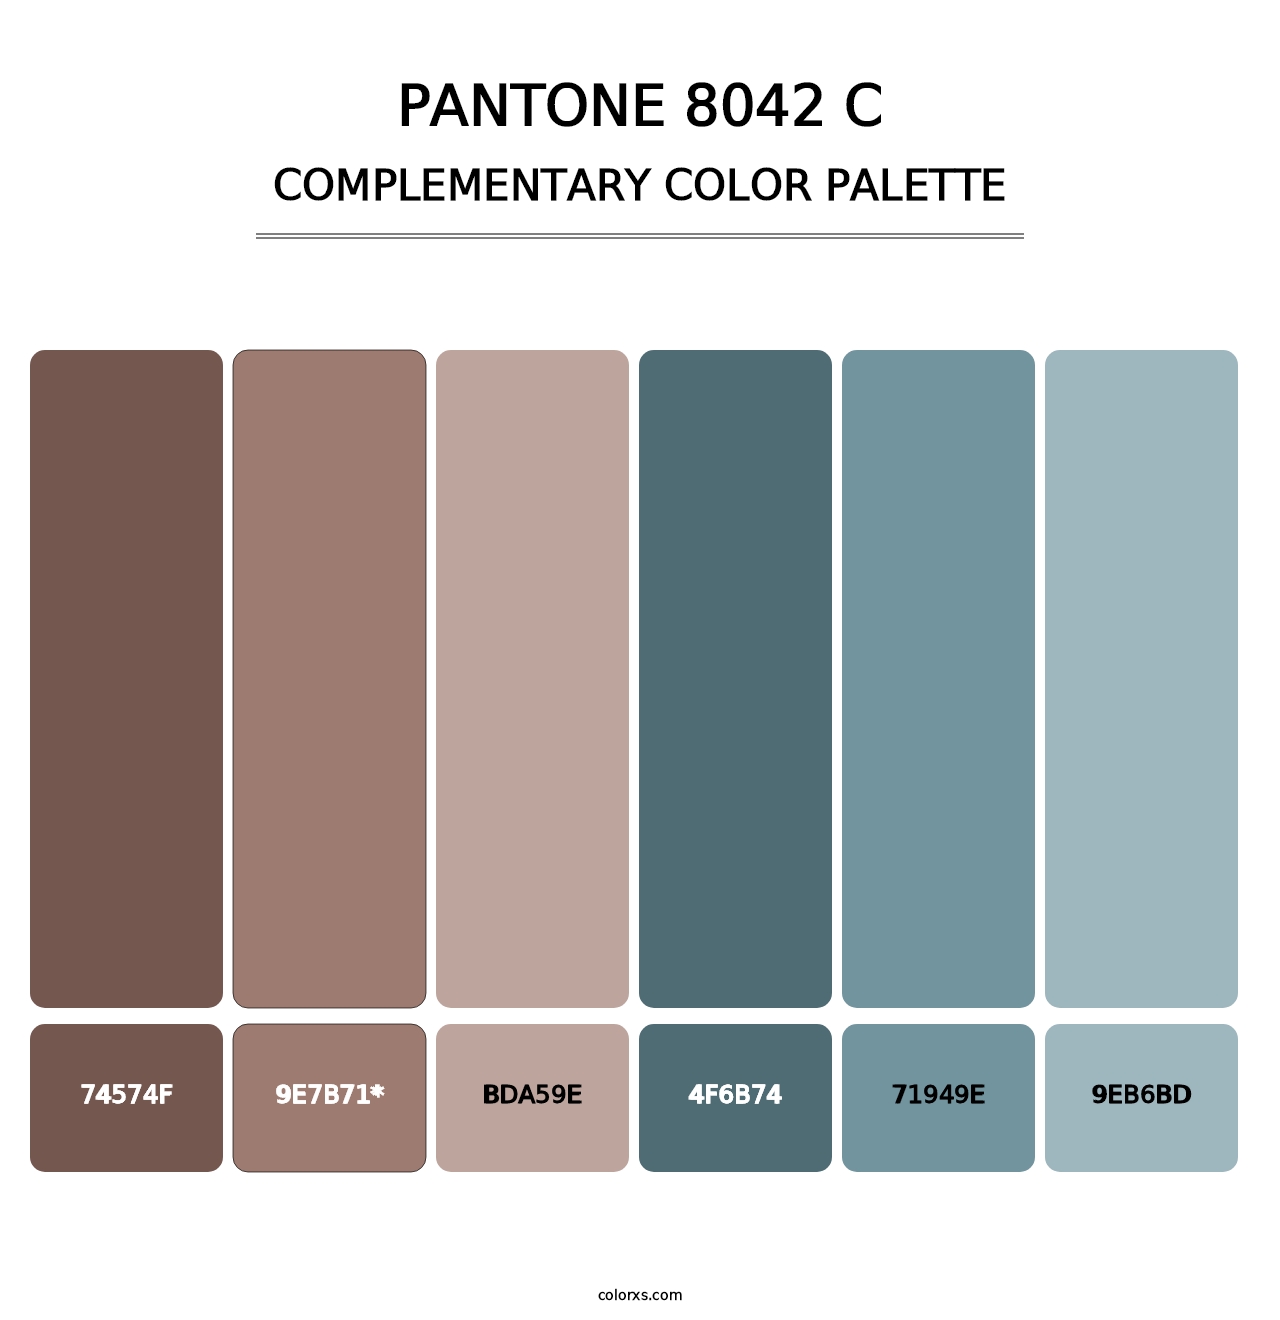 PANTONE 8042 C - Complementary Color Palette